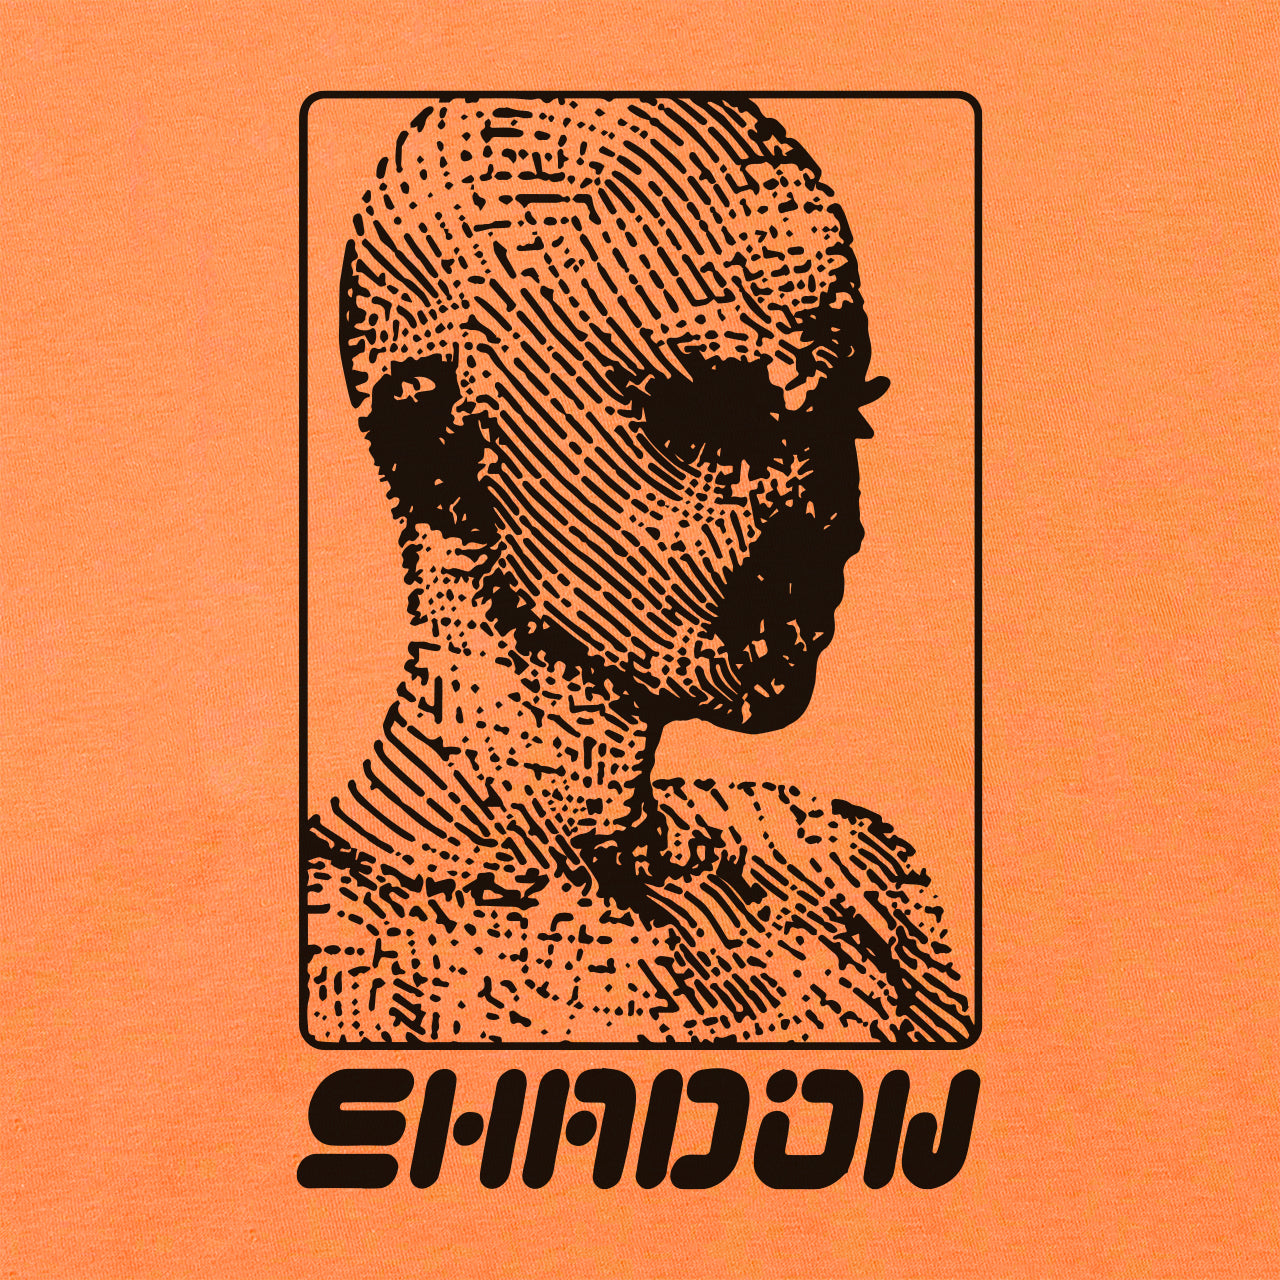 Shadow T-shirt